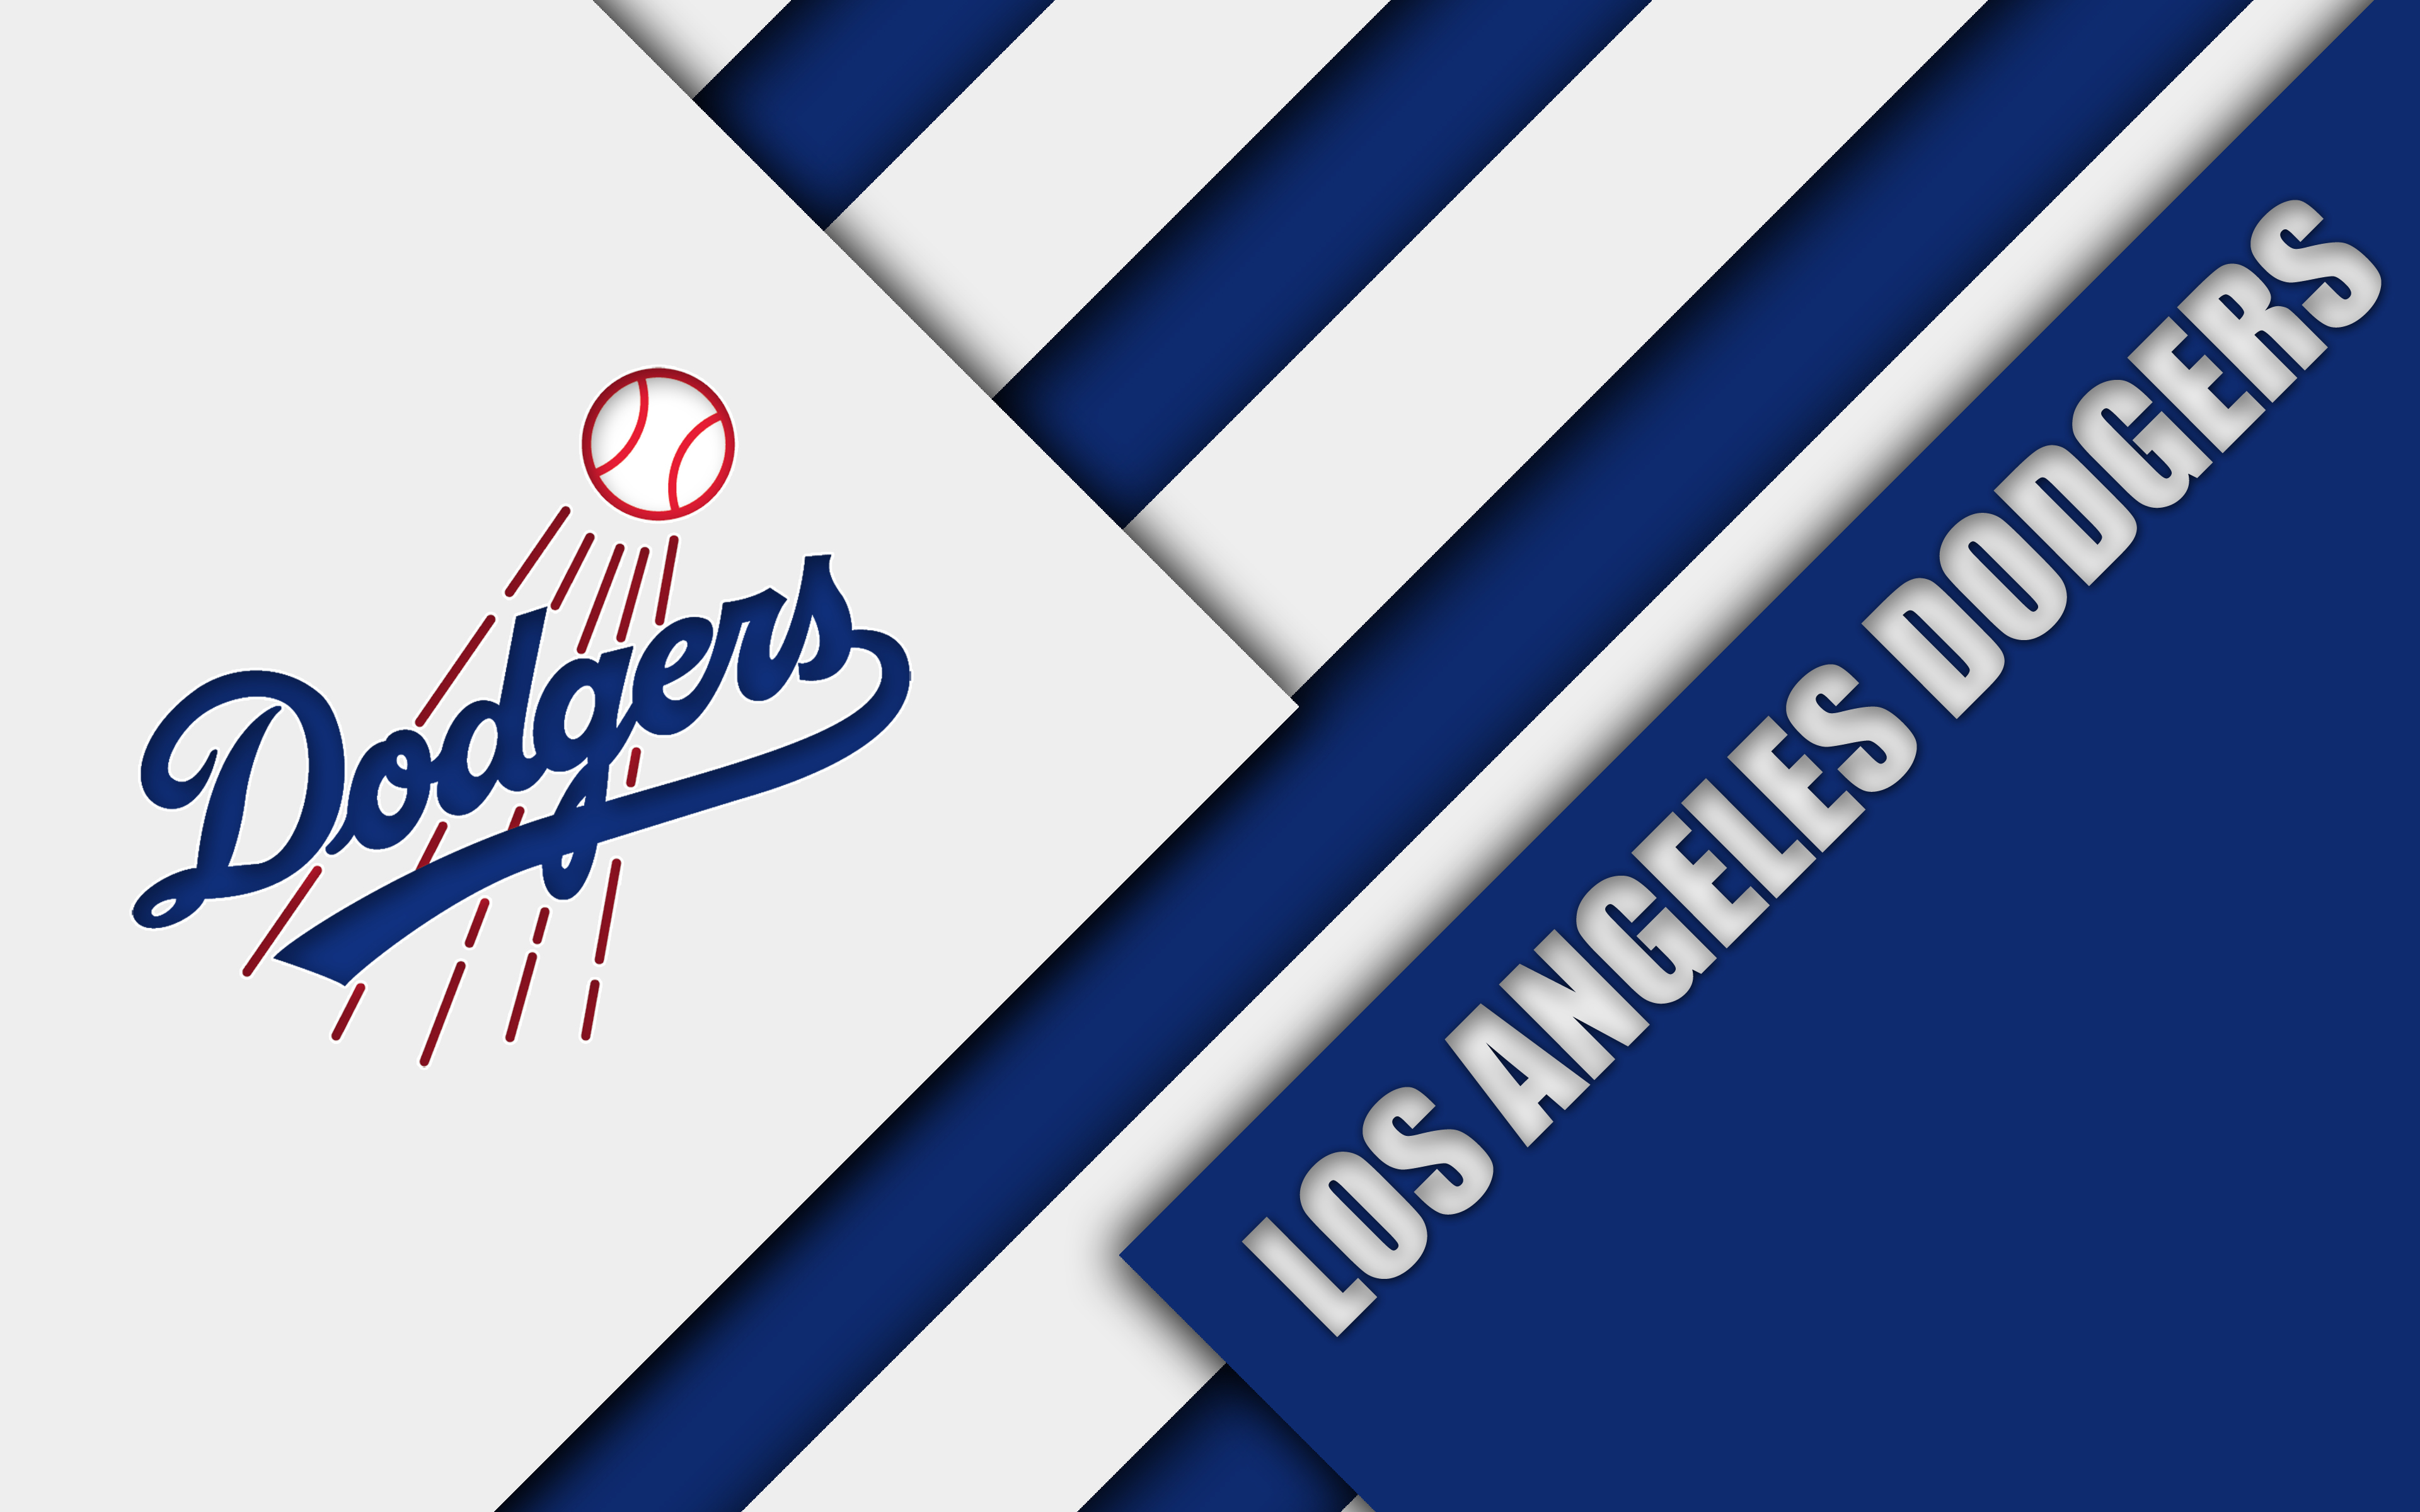 Los Angeles Dodgers 4k Ultra HD Wallpaper Background Image